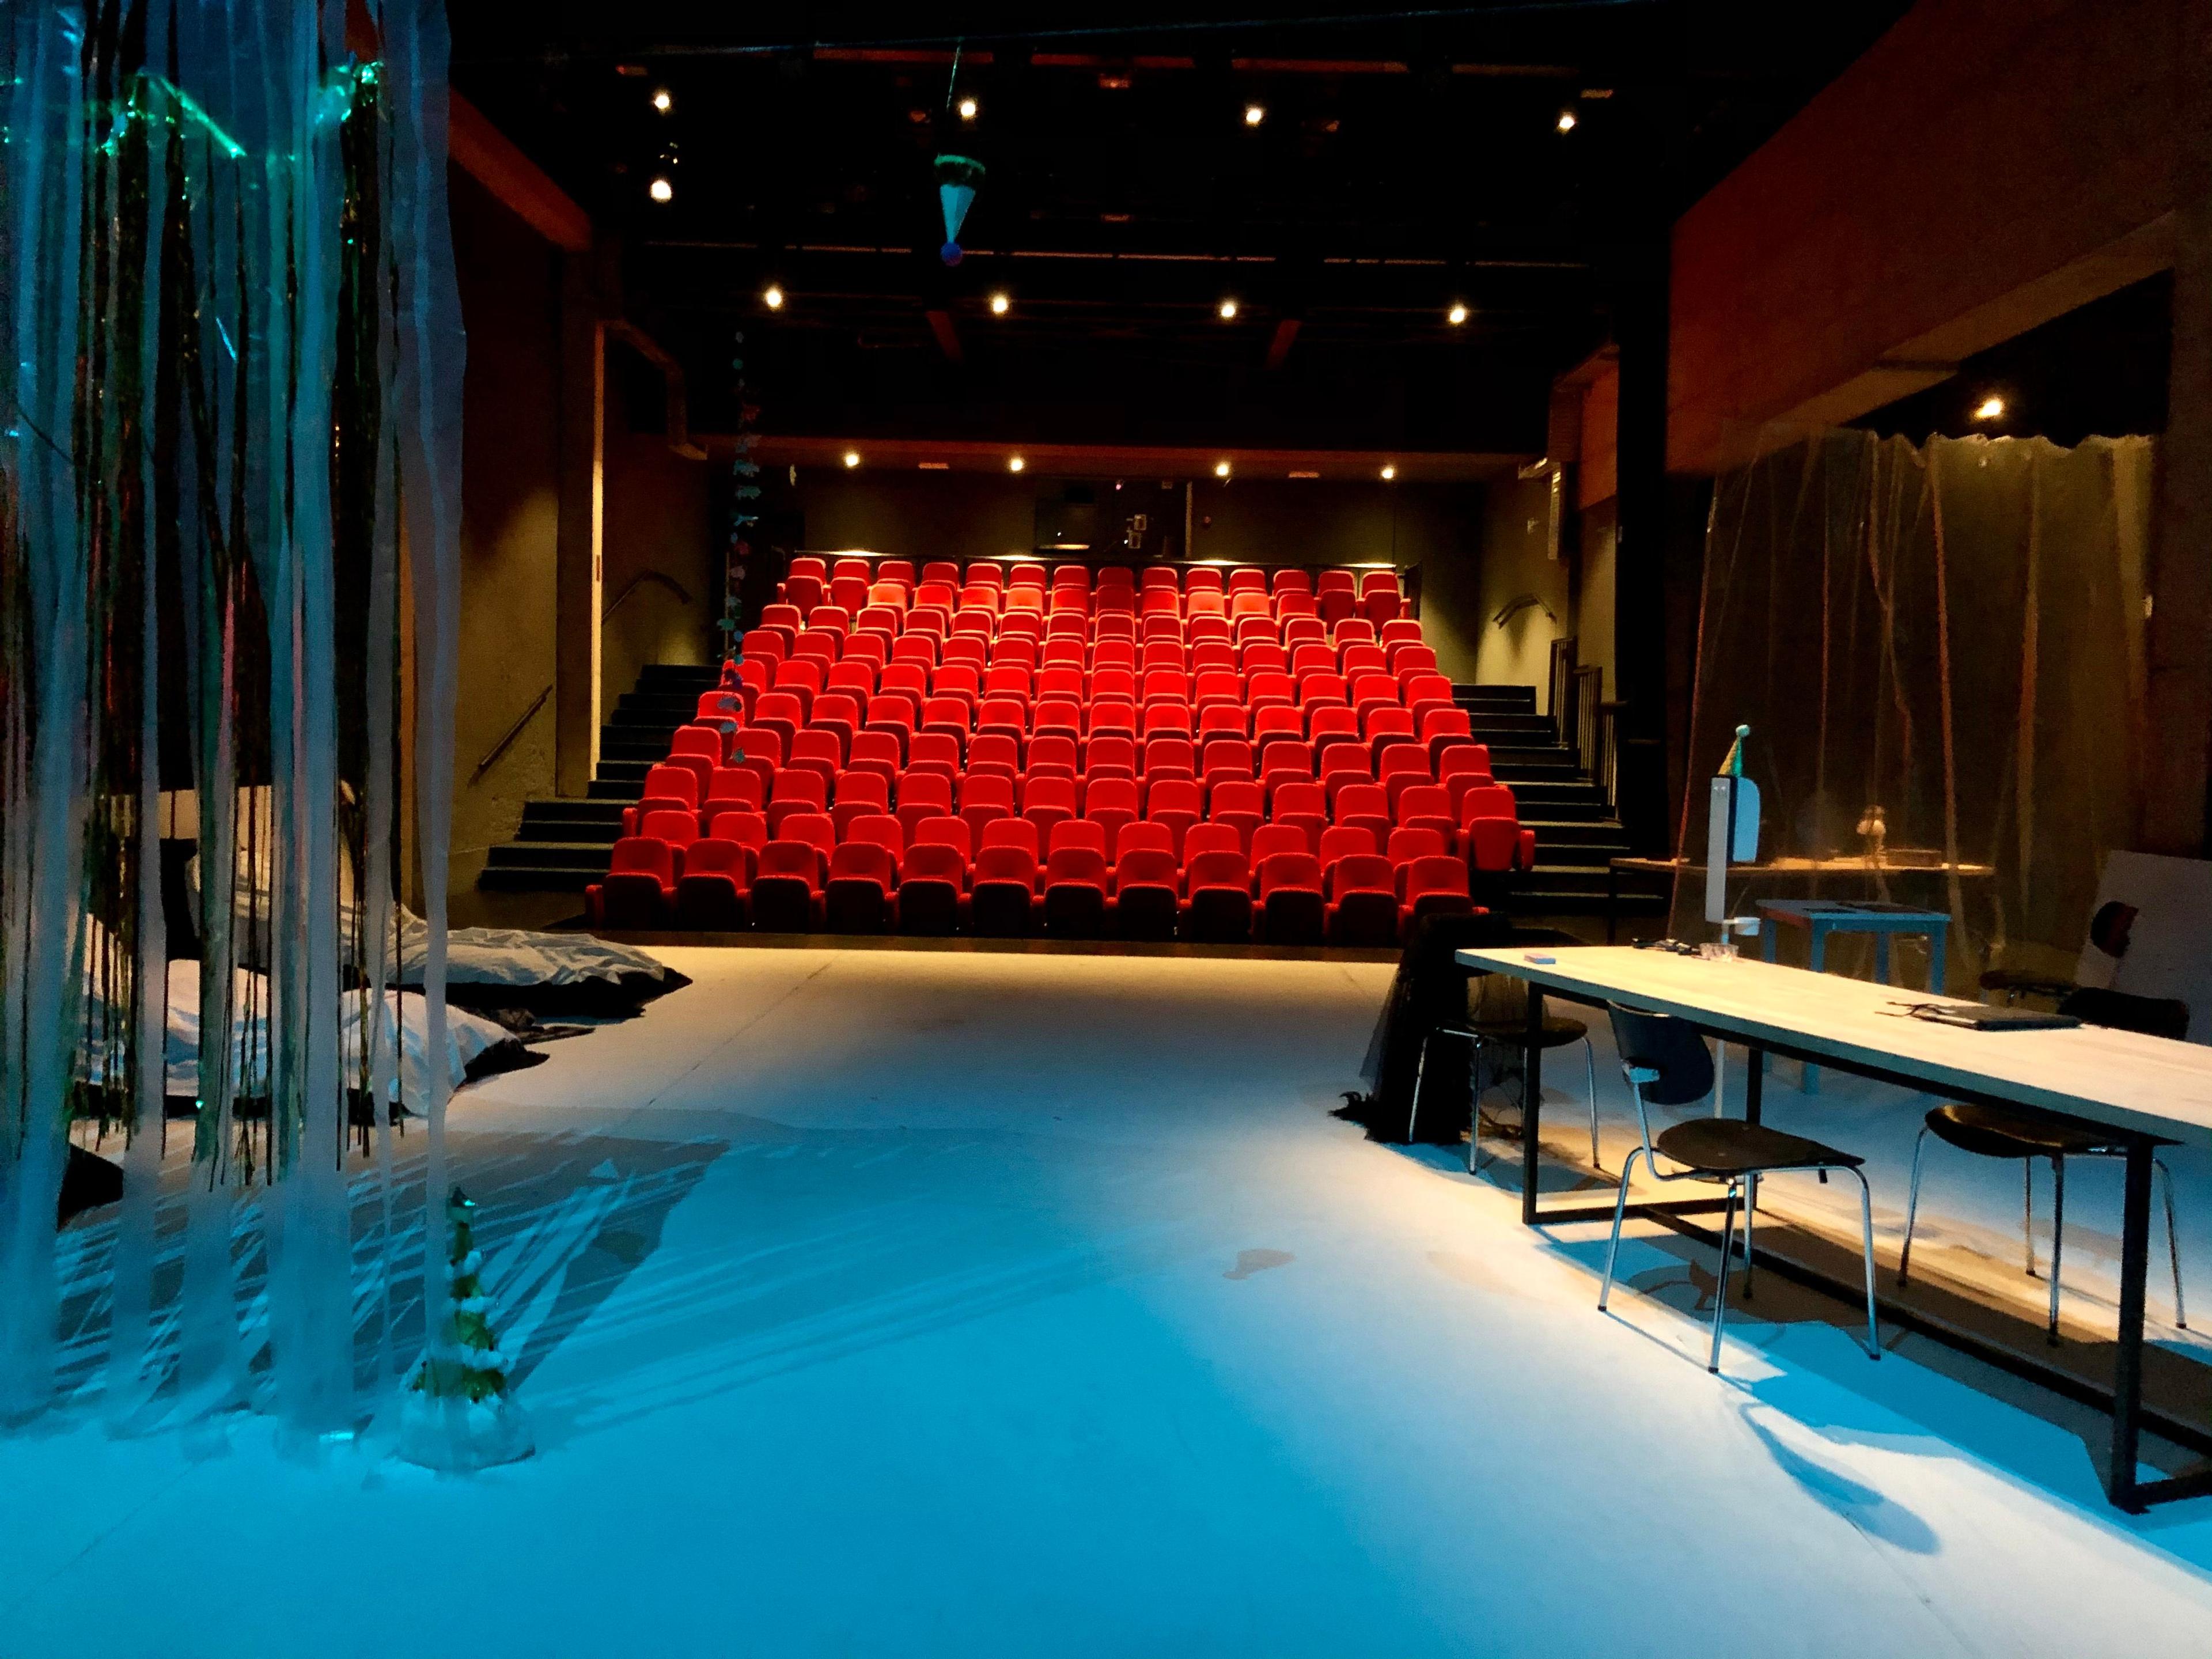 Théâtre National du Luxembourg